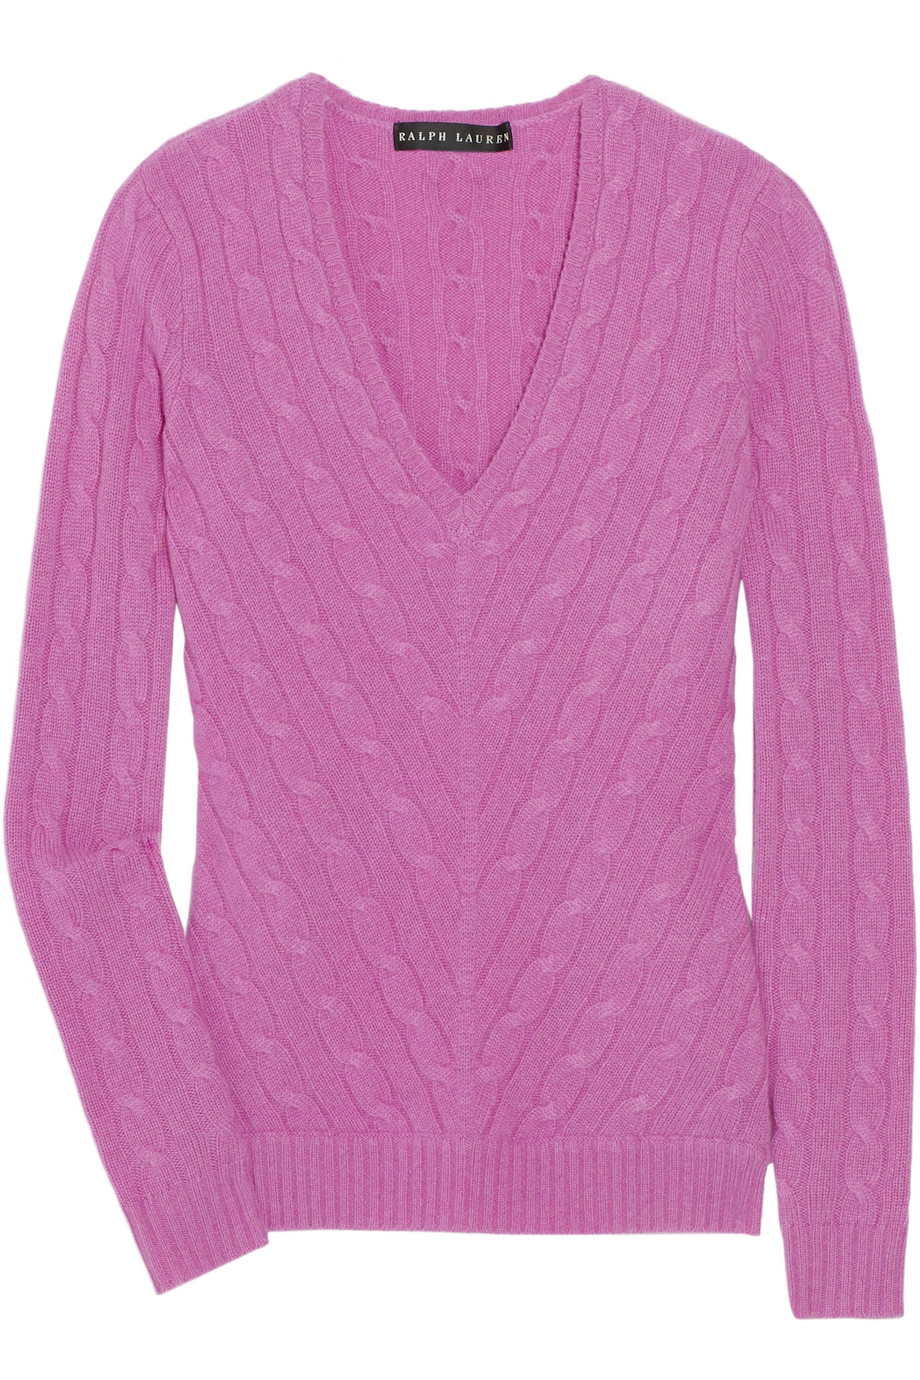 Ralph Lauren Black Label V-neck Cashmere Sweater in Pink | Lyst